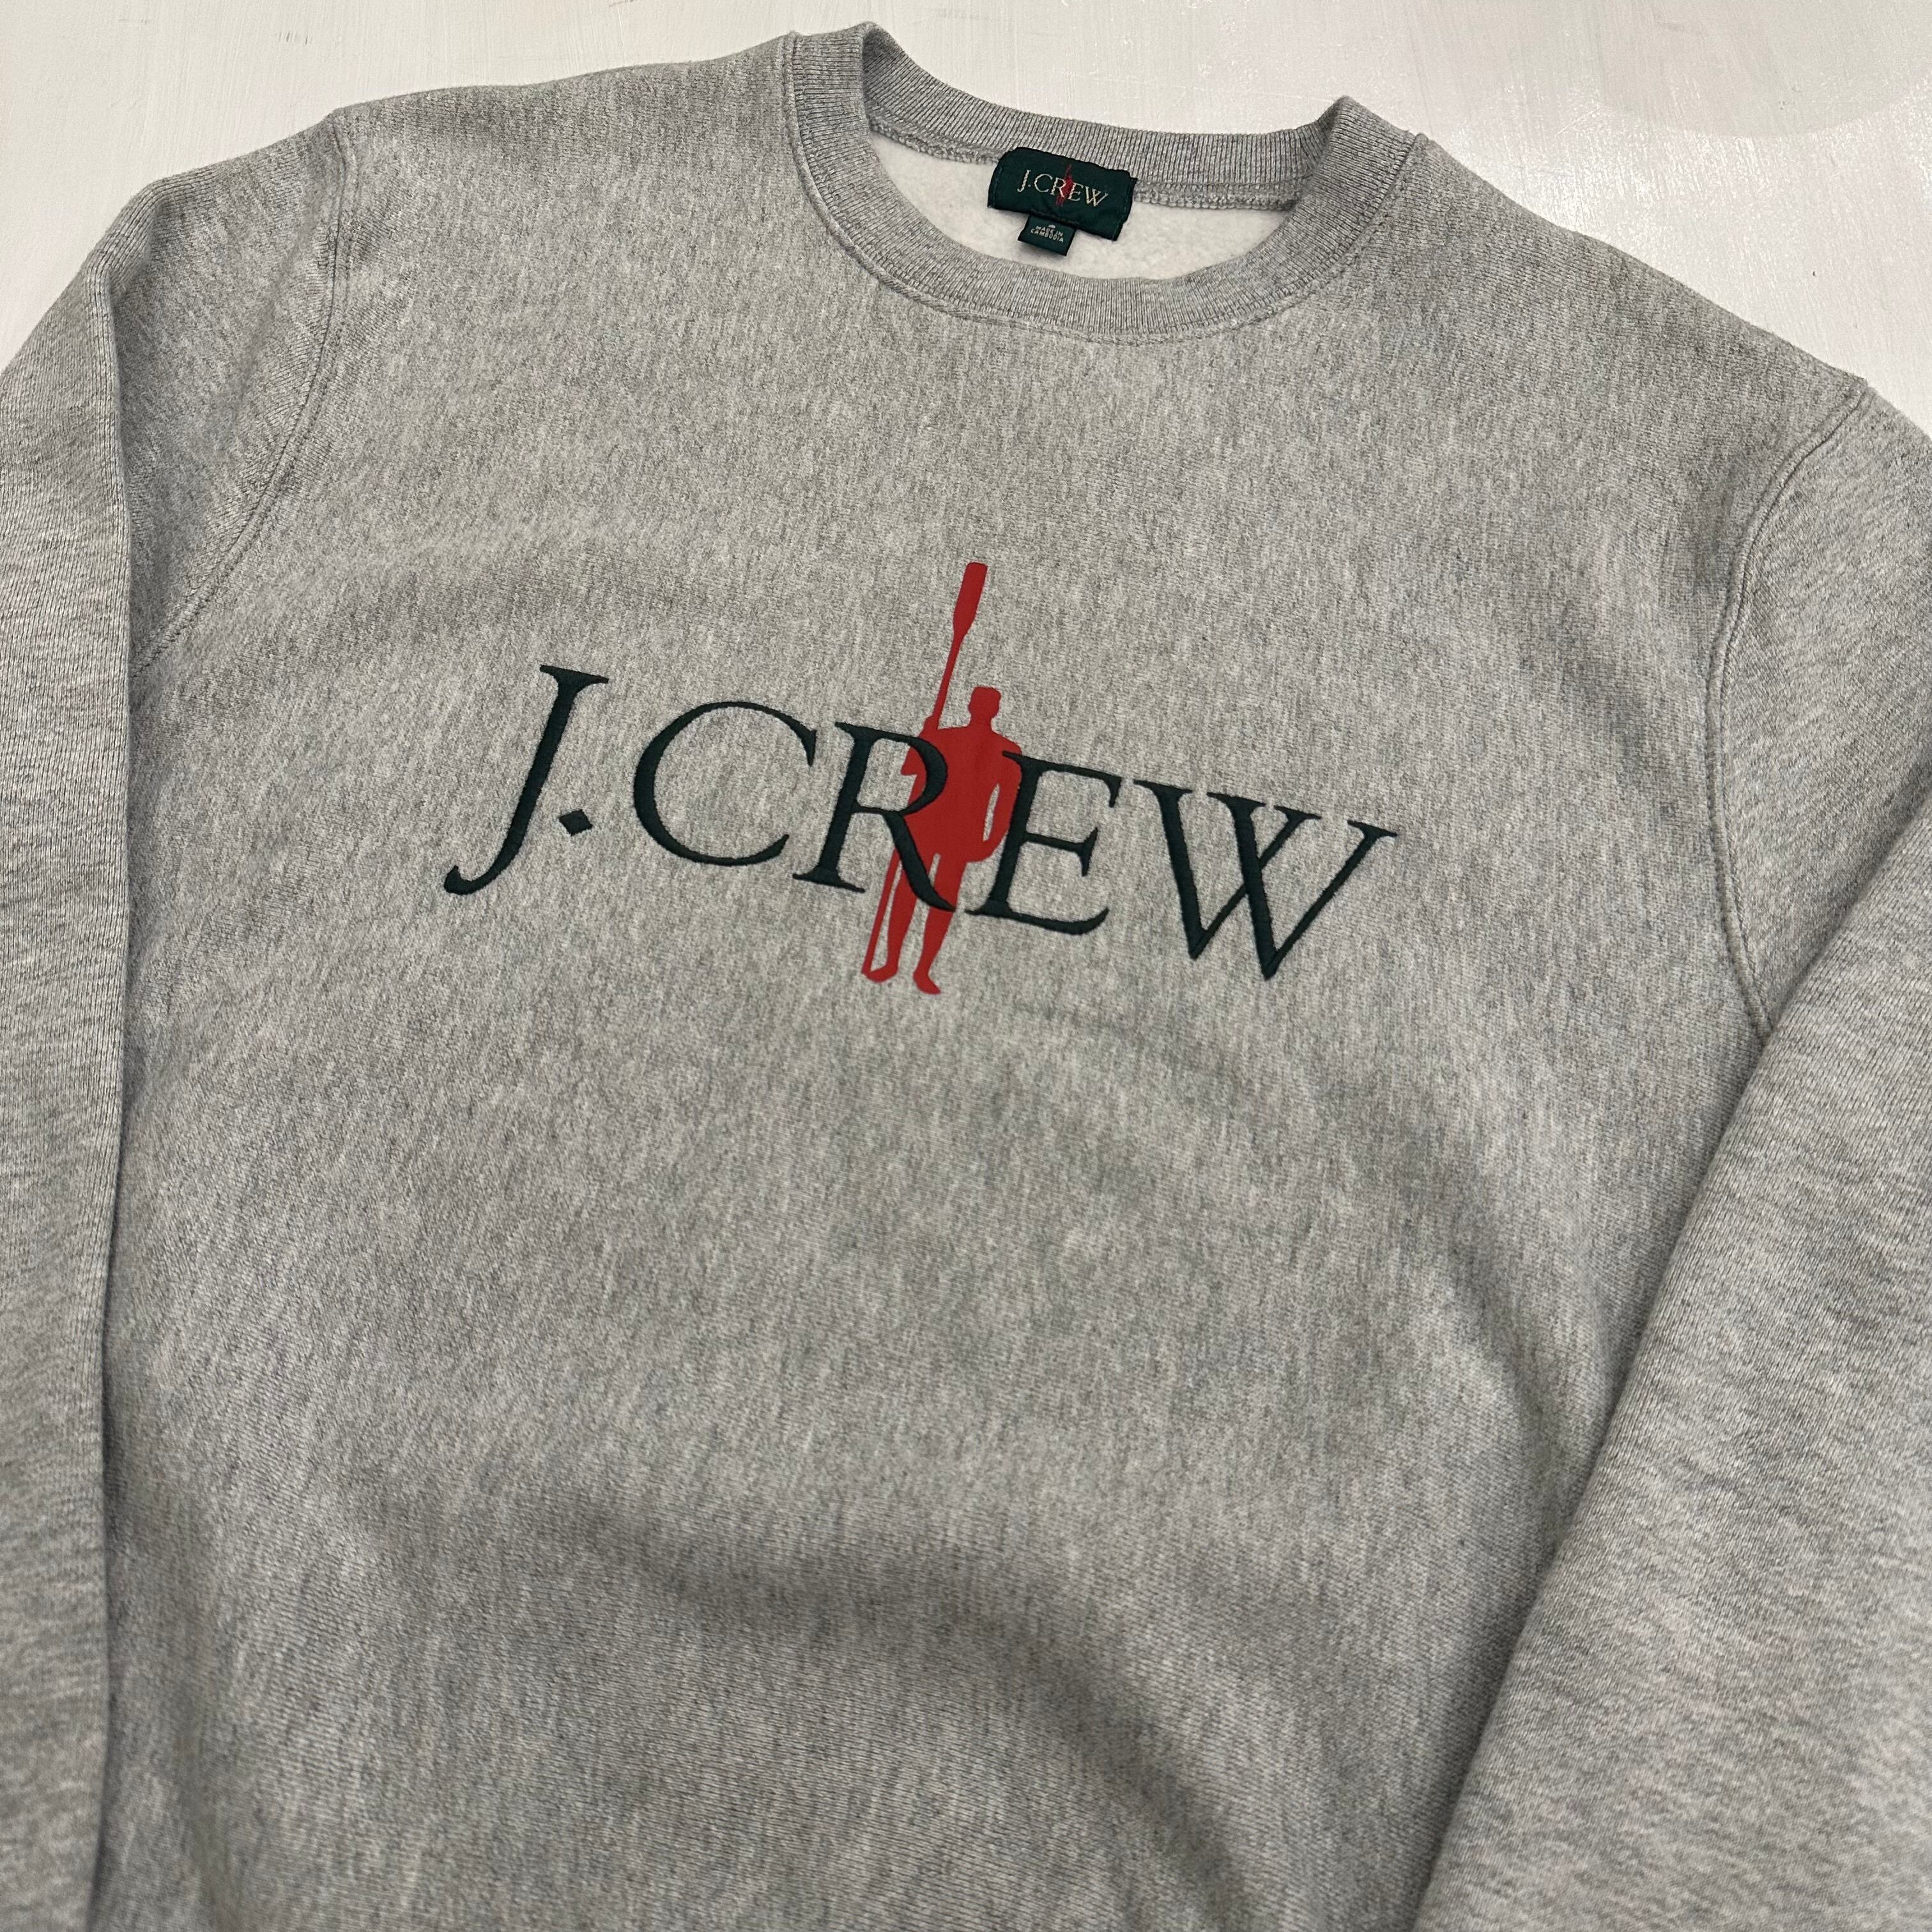 80s jcrew logo sweat